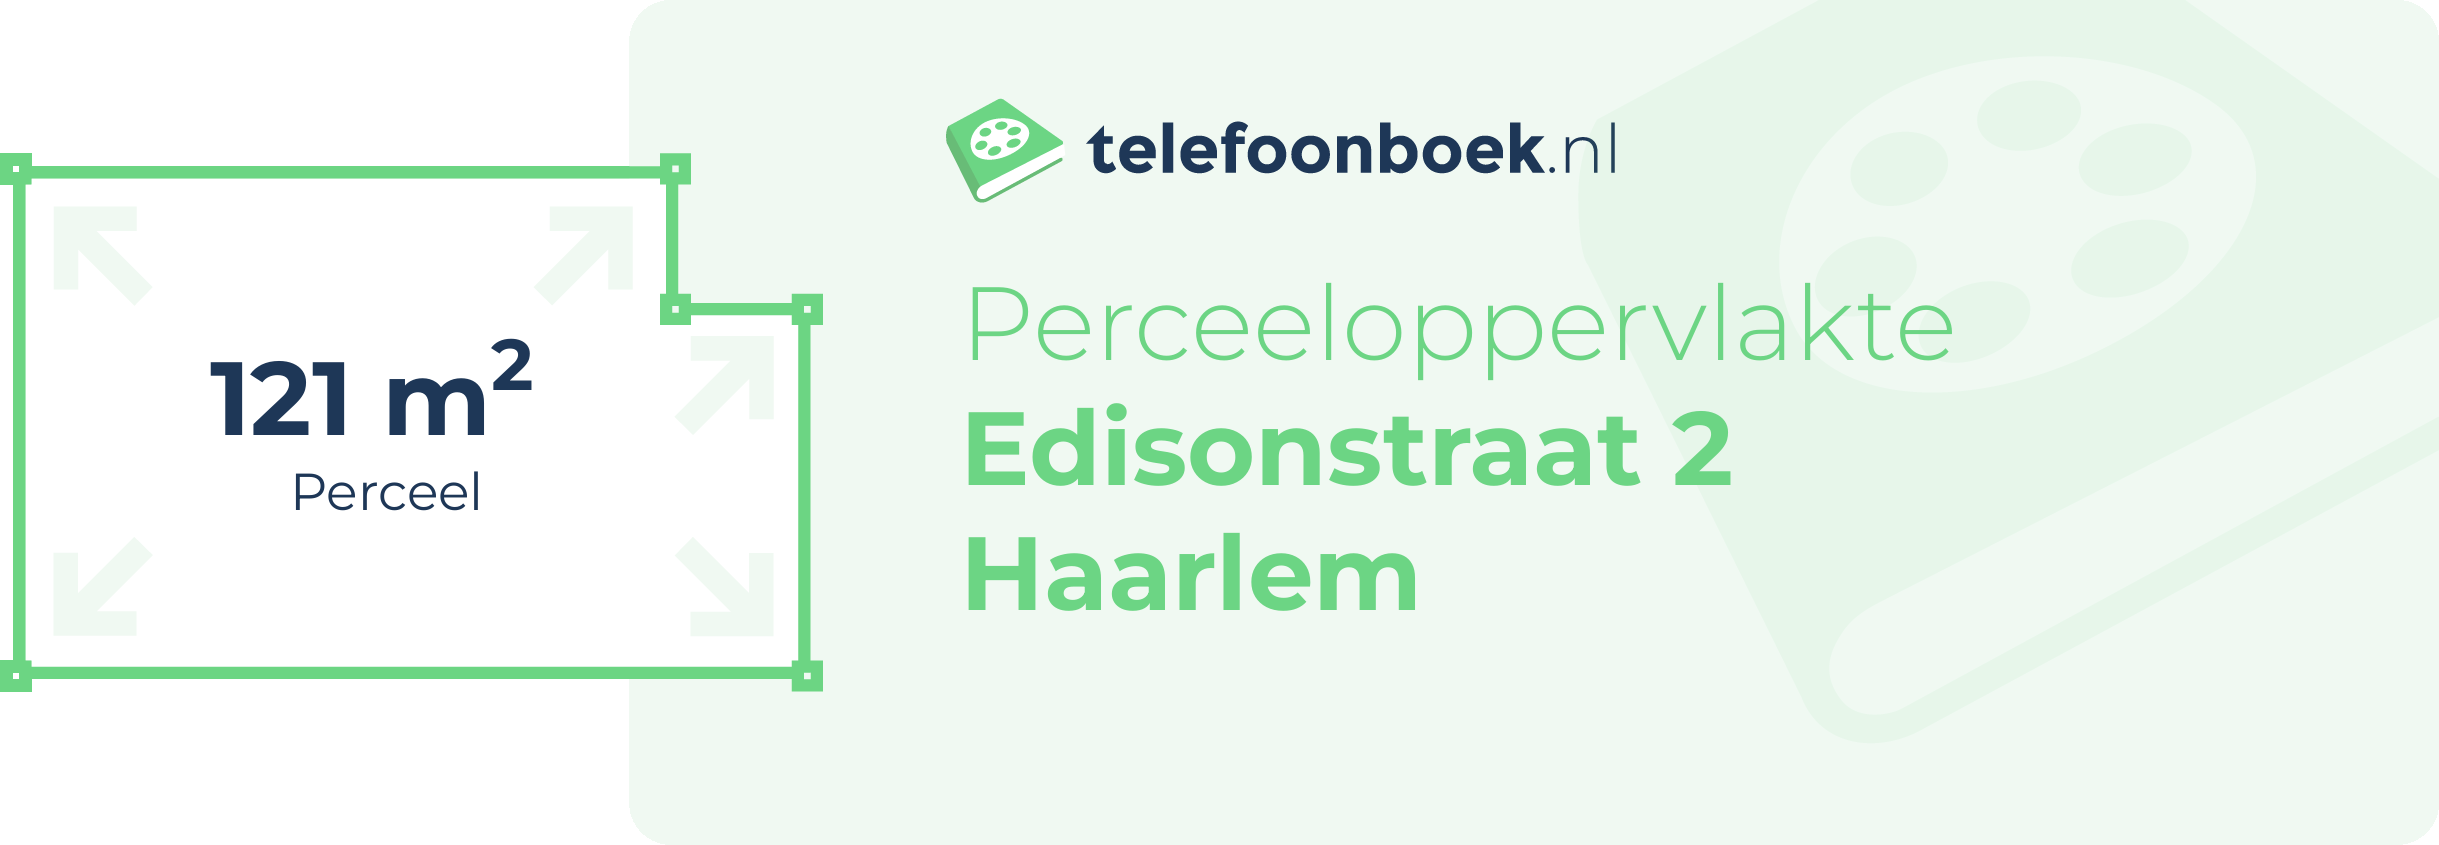 Perceeloppervlakte Edisonstraat 2 Haarlem